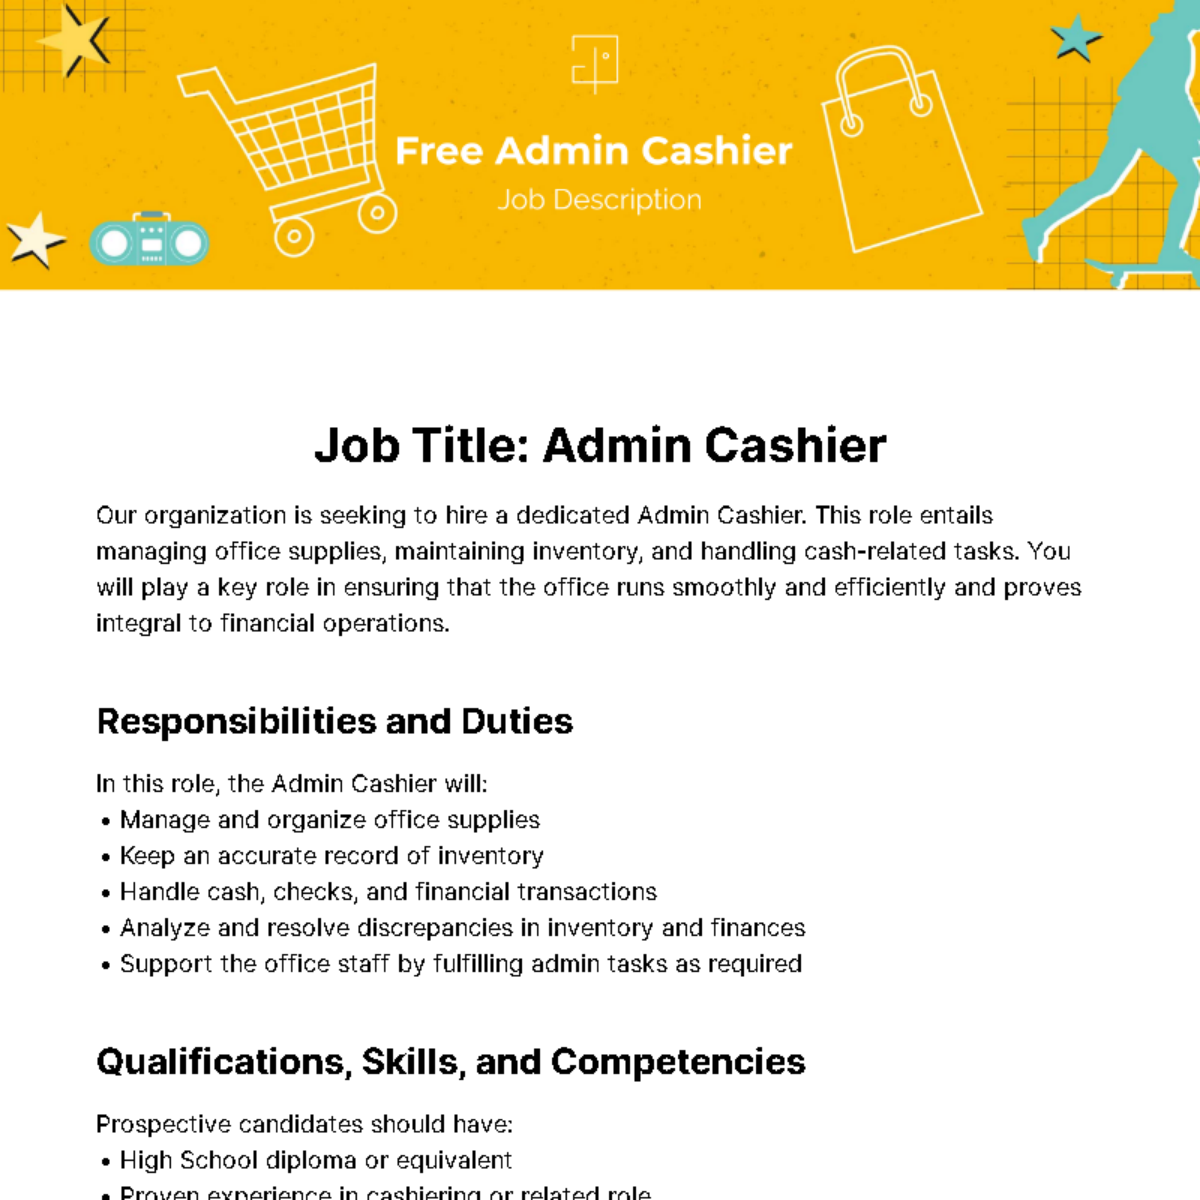 Free Admin Cashier Job Description Template